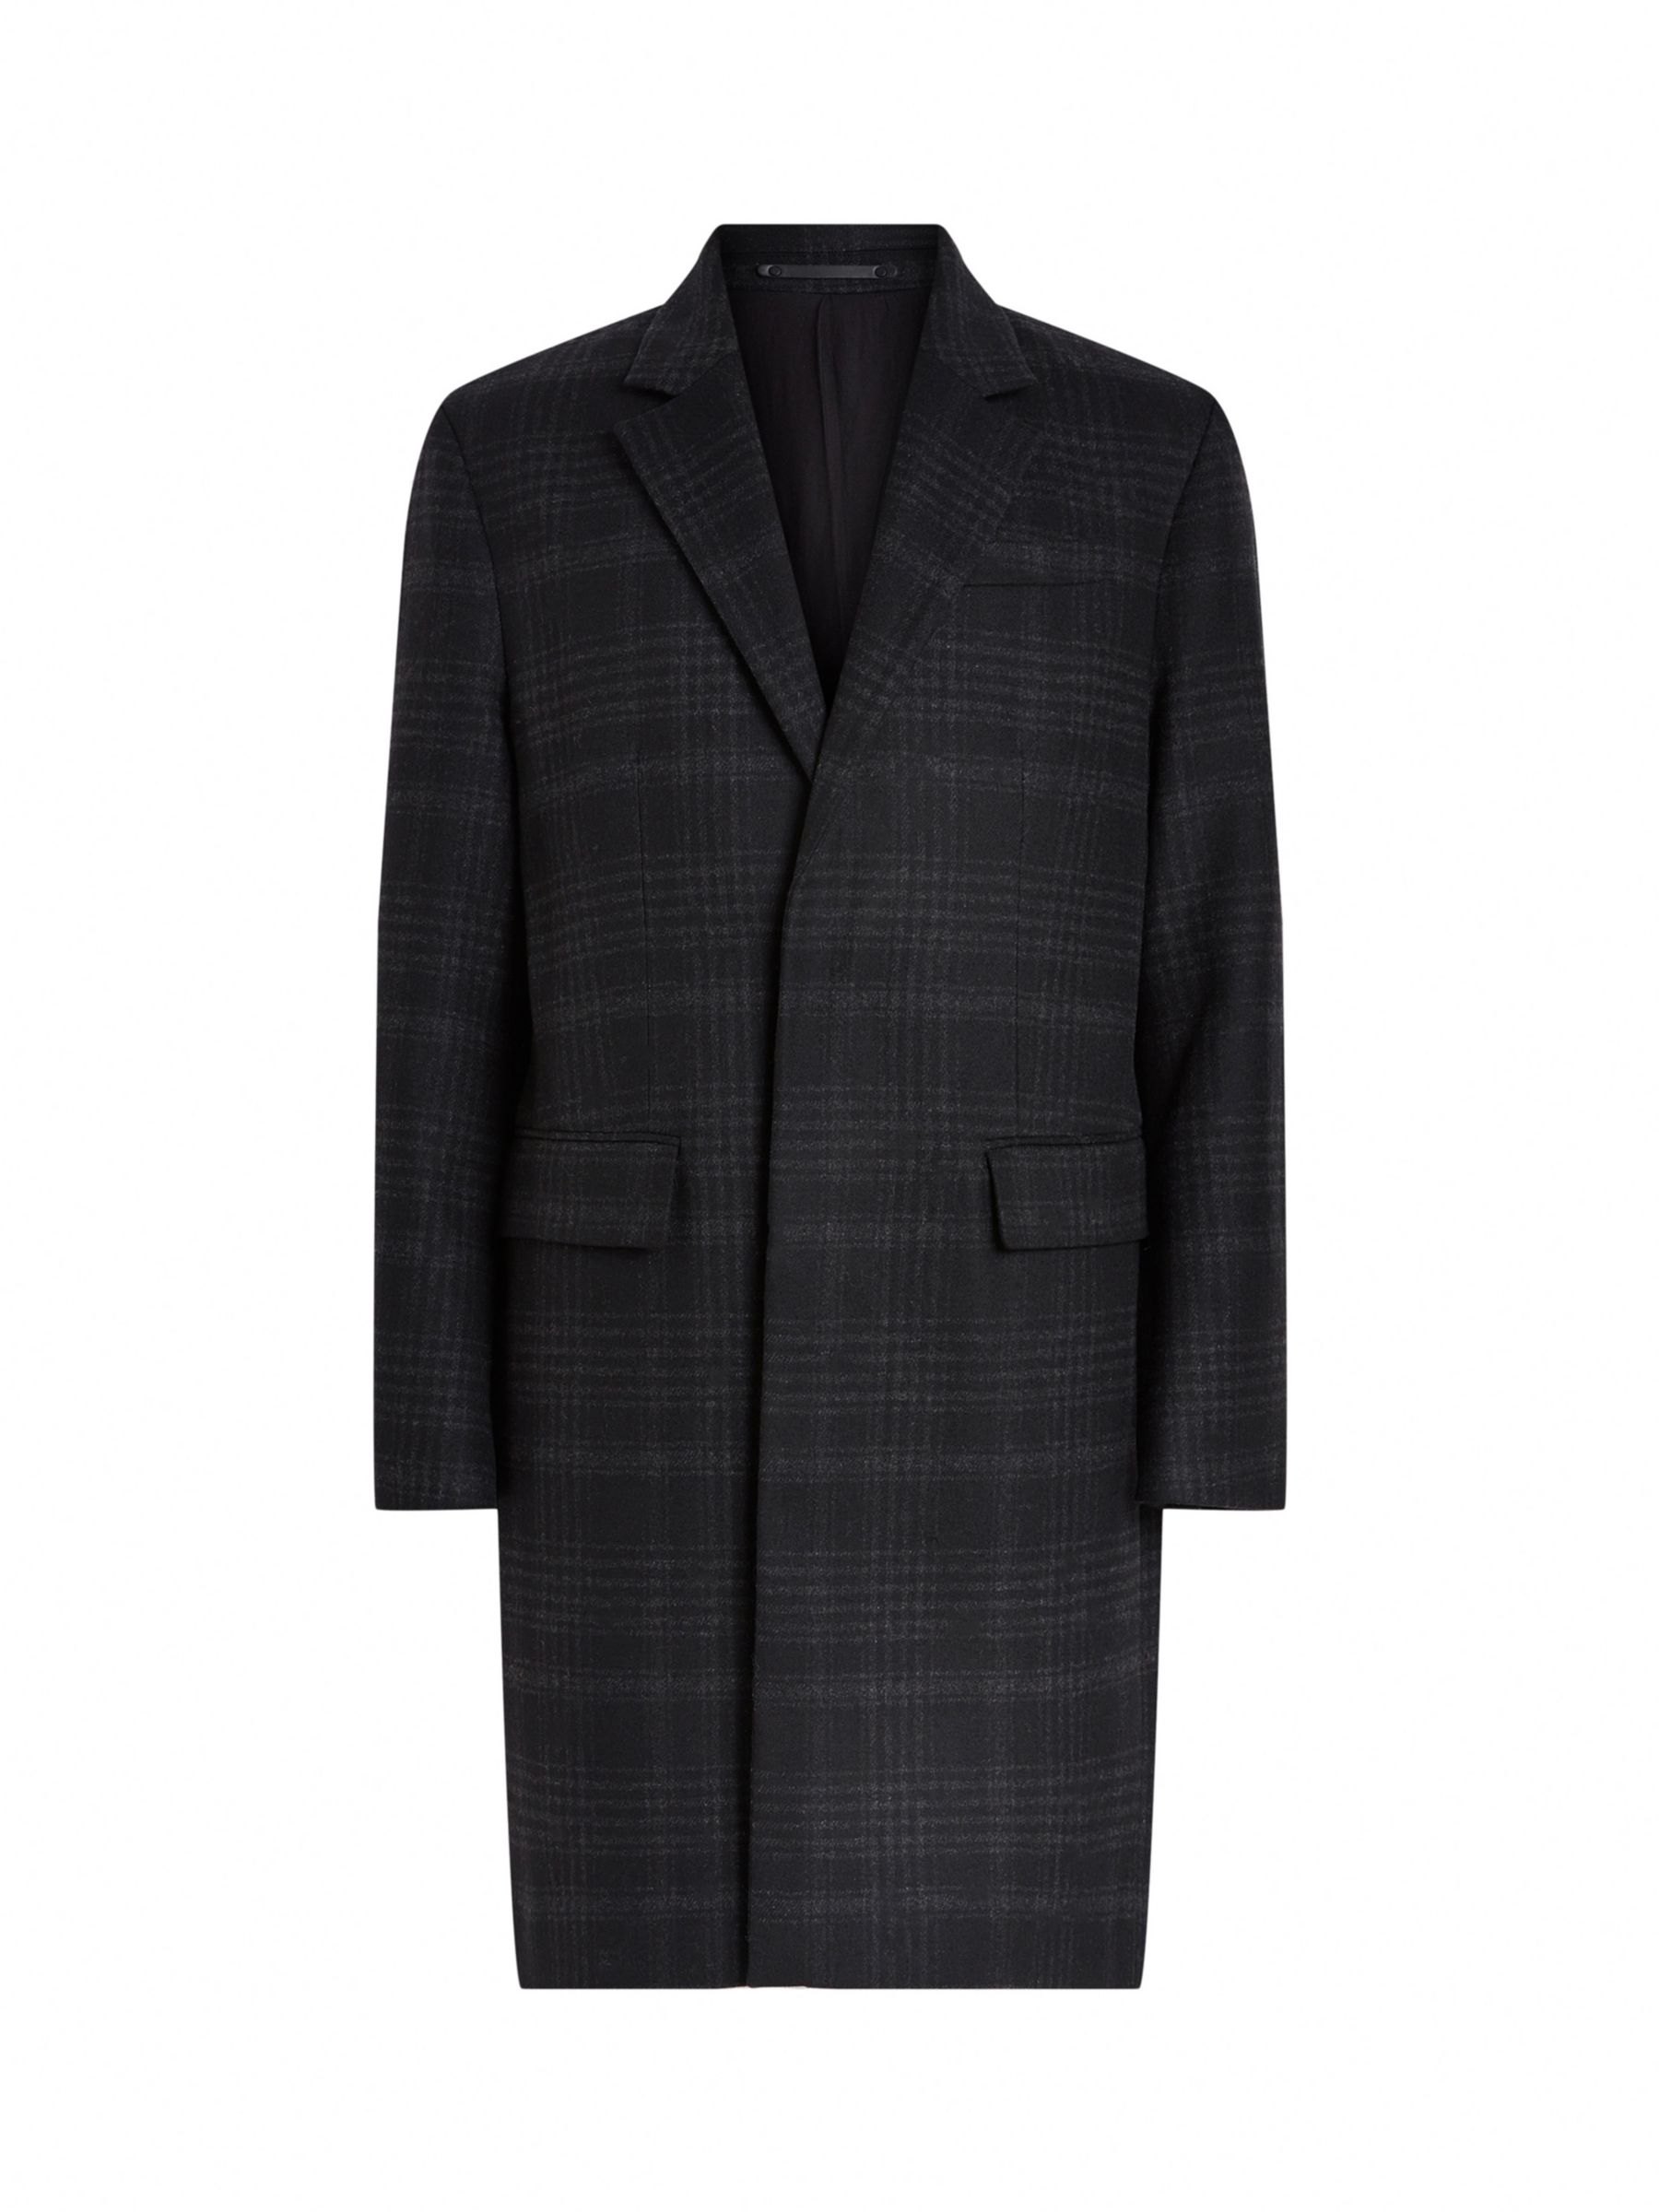 AllSaints Sargas Wool Blend Checked Coat, Black/Grey, 44R